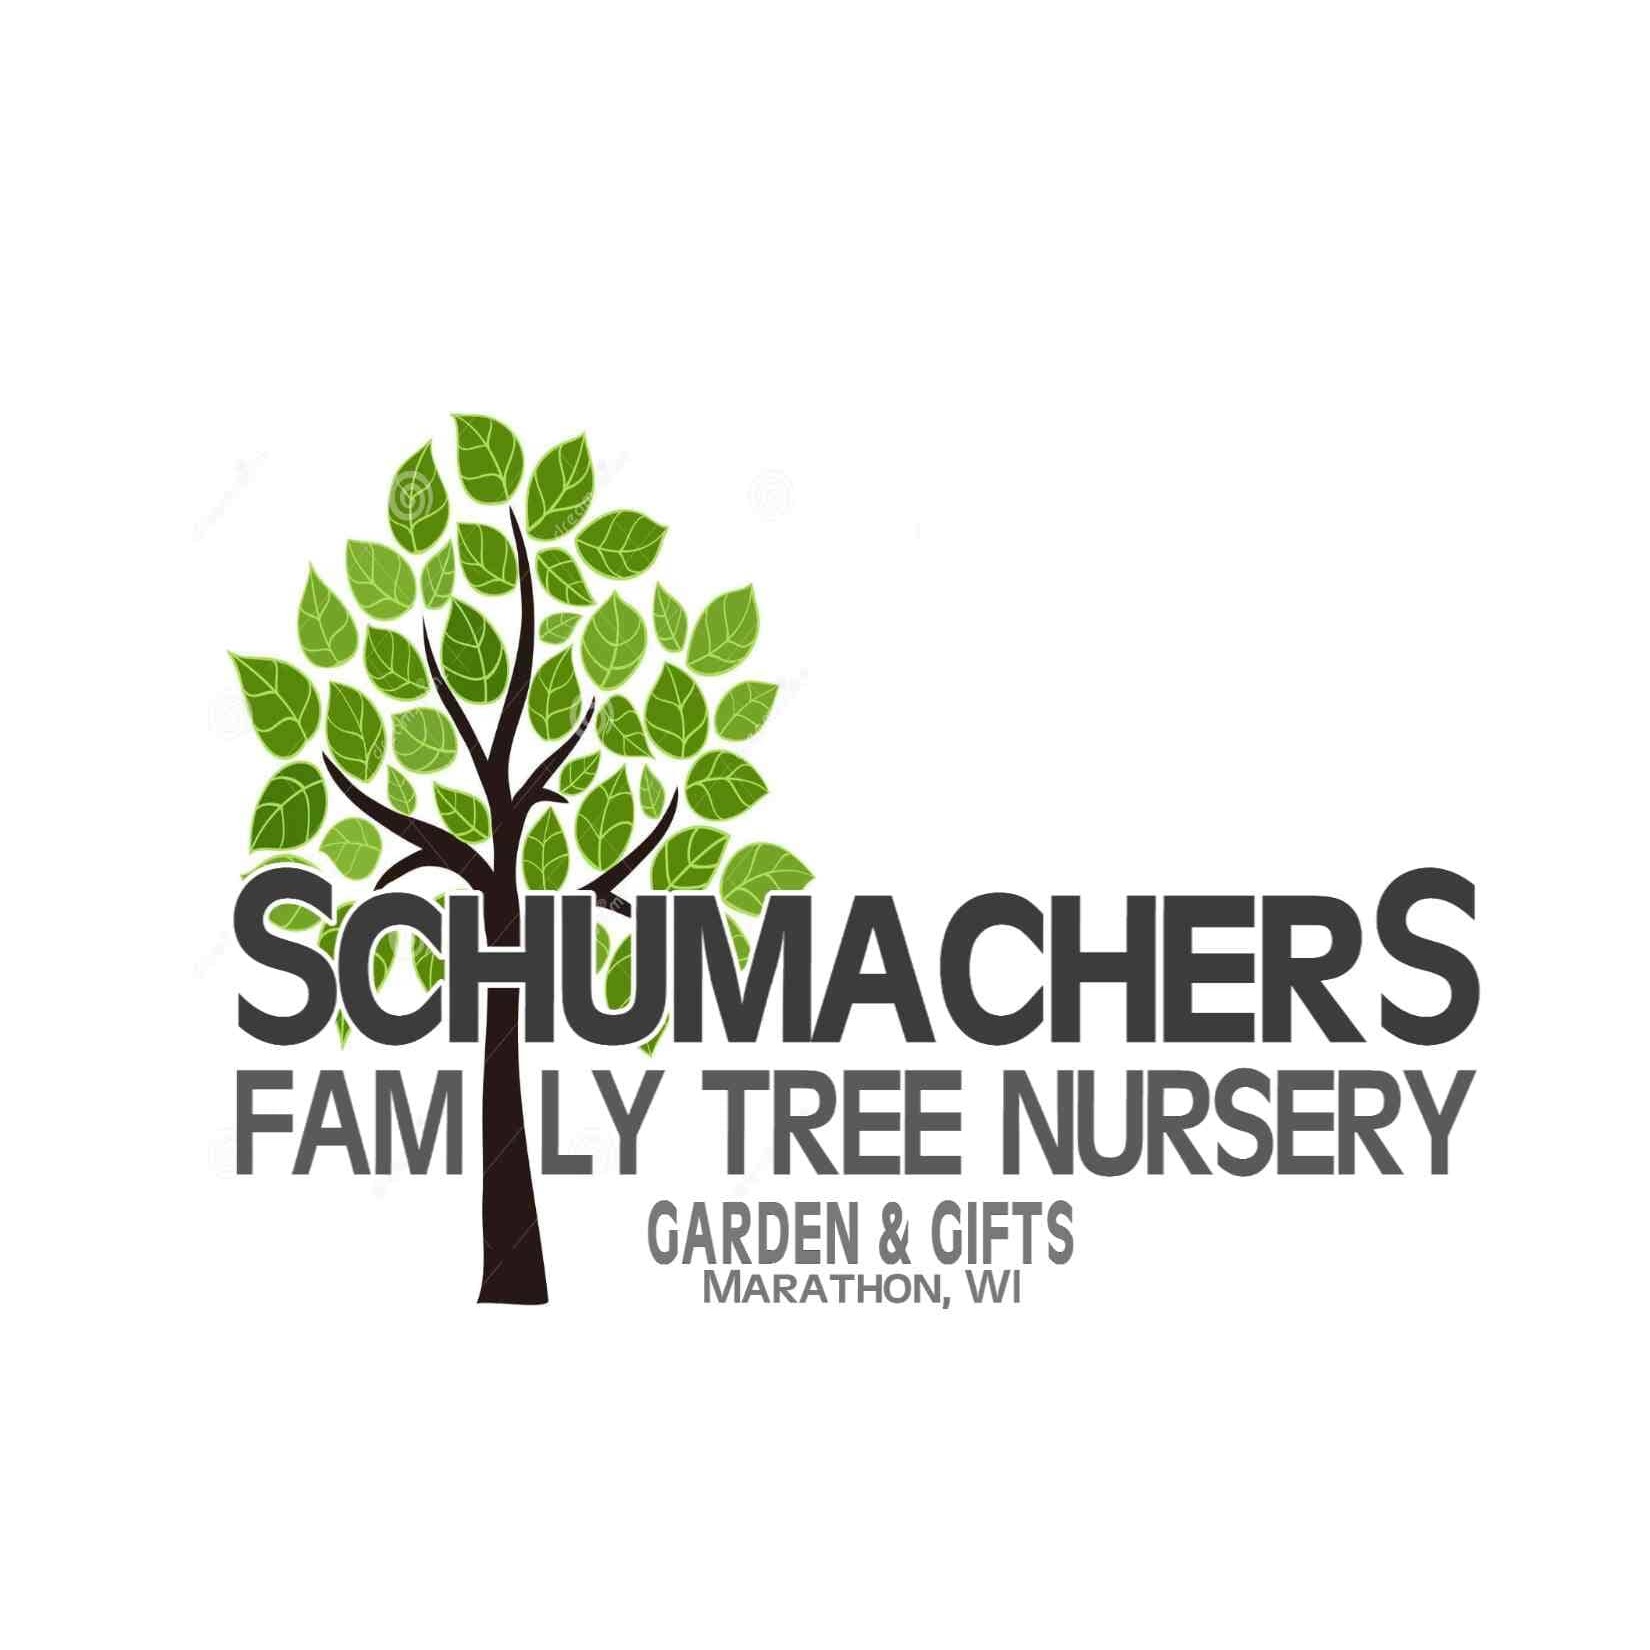 Schumacher's Family Tree Nursery